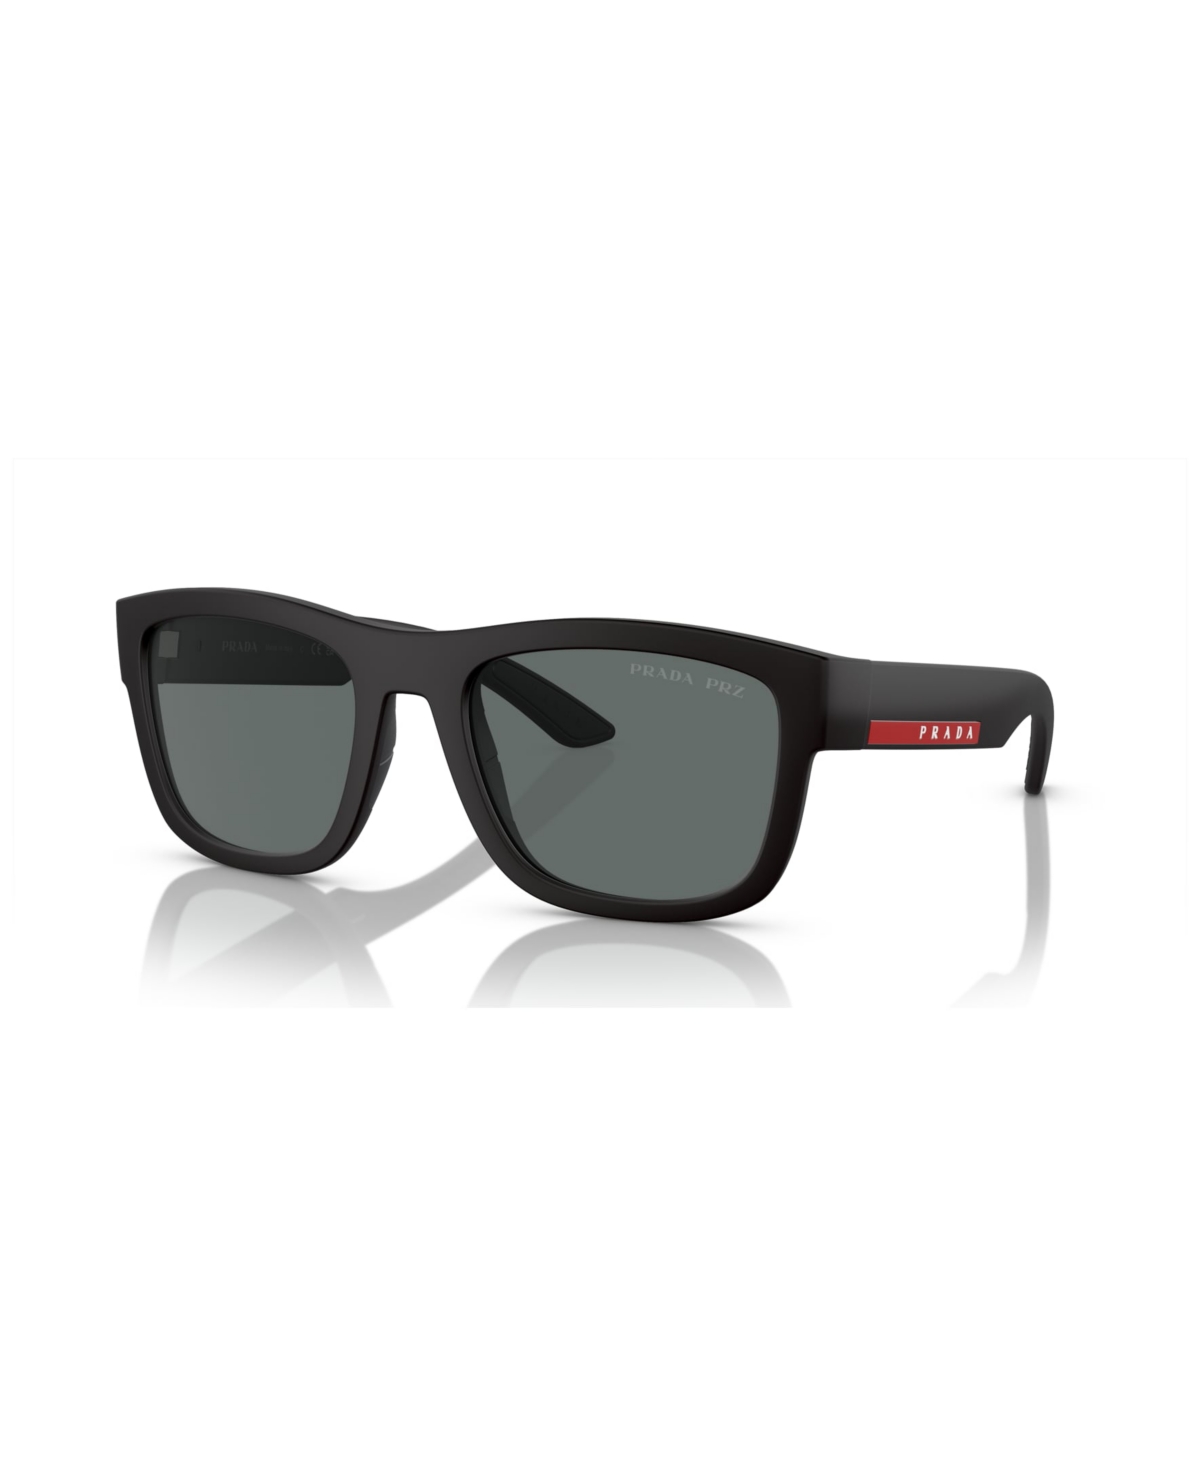 Prada Men's Polarized Sunglasses, Ps 01zs In Black Rubber